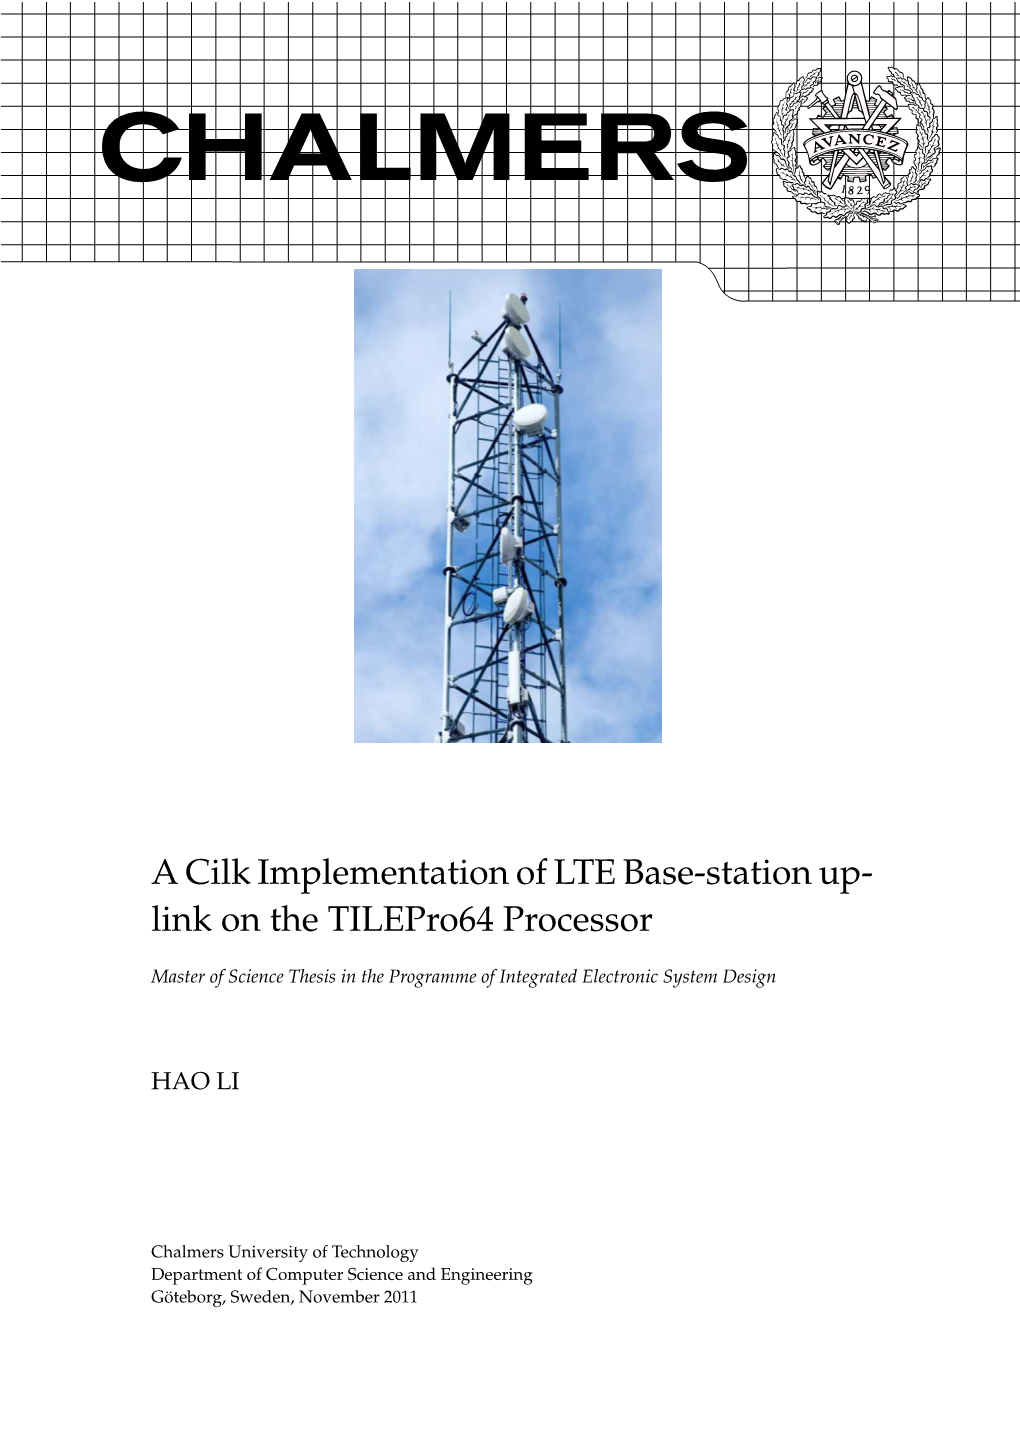 A Cilk Implementation of LTE Base-Station Up- Link on the Tilepro64 Processor